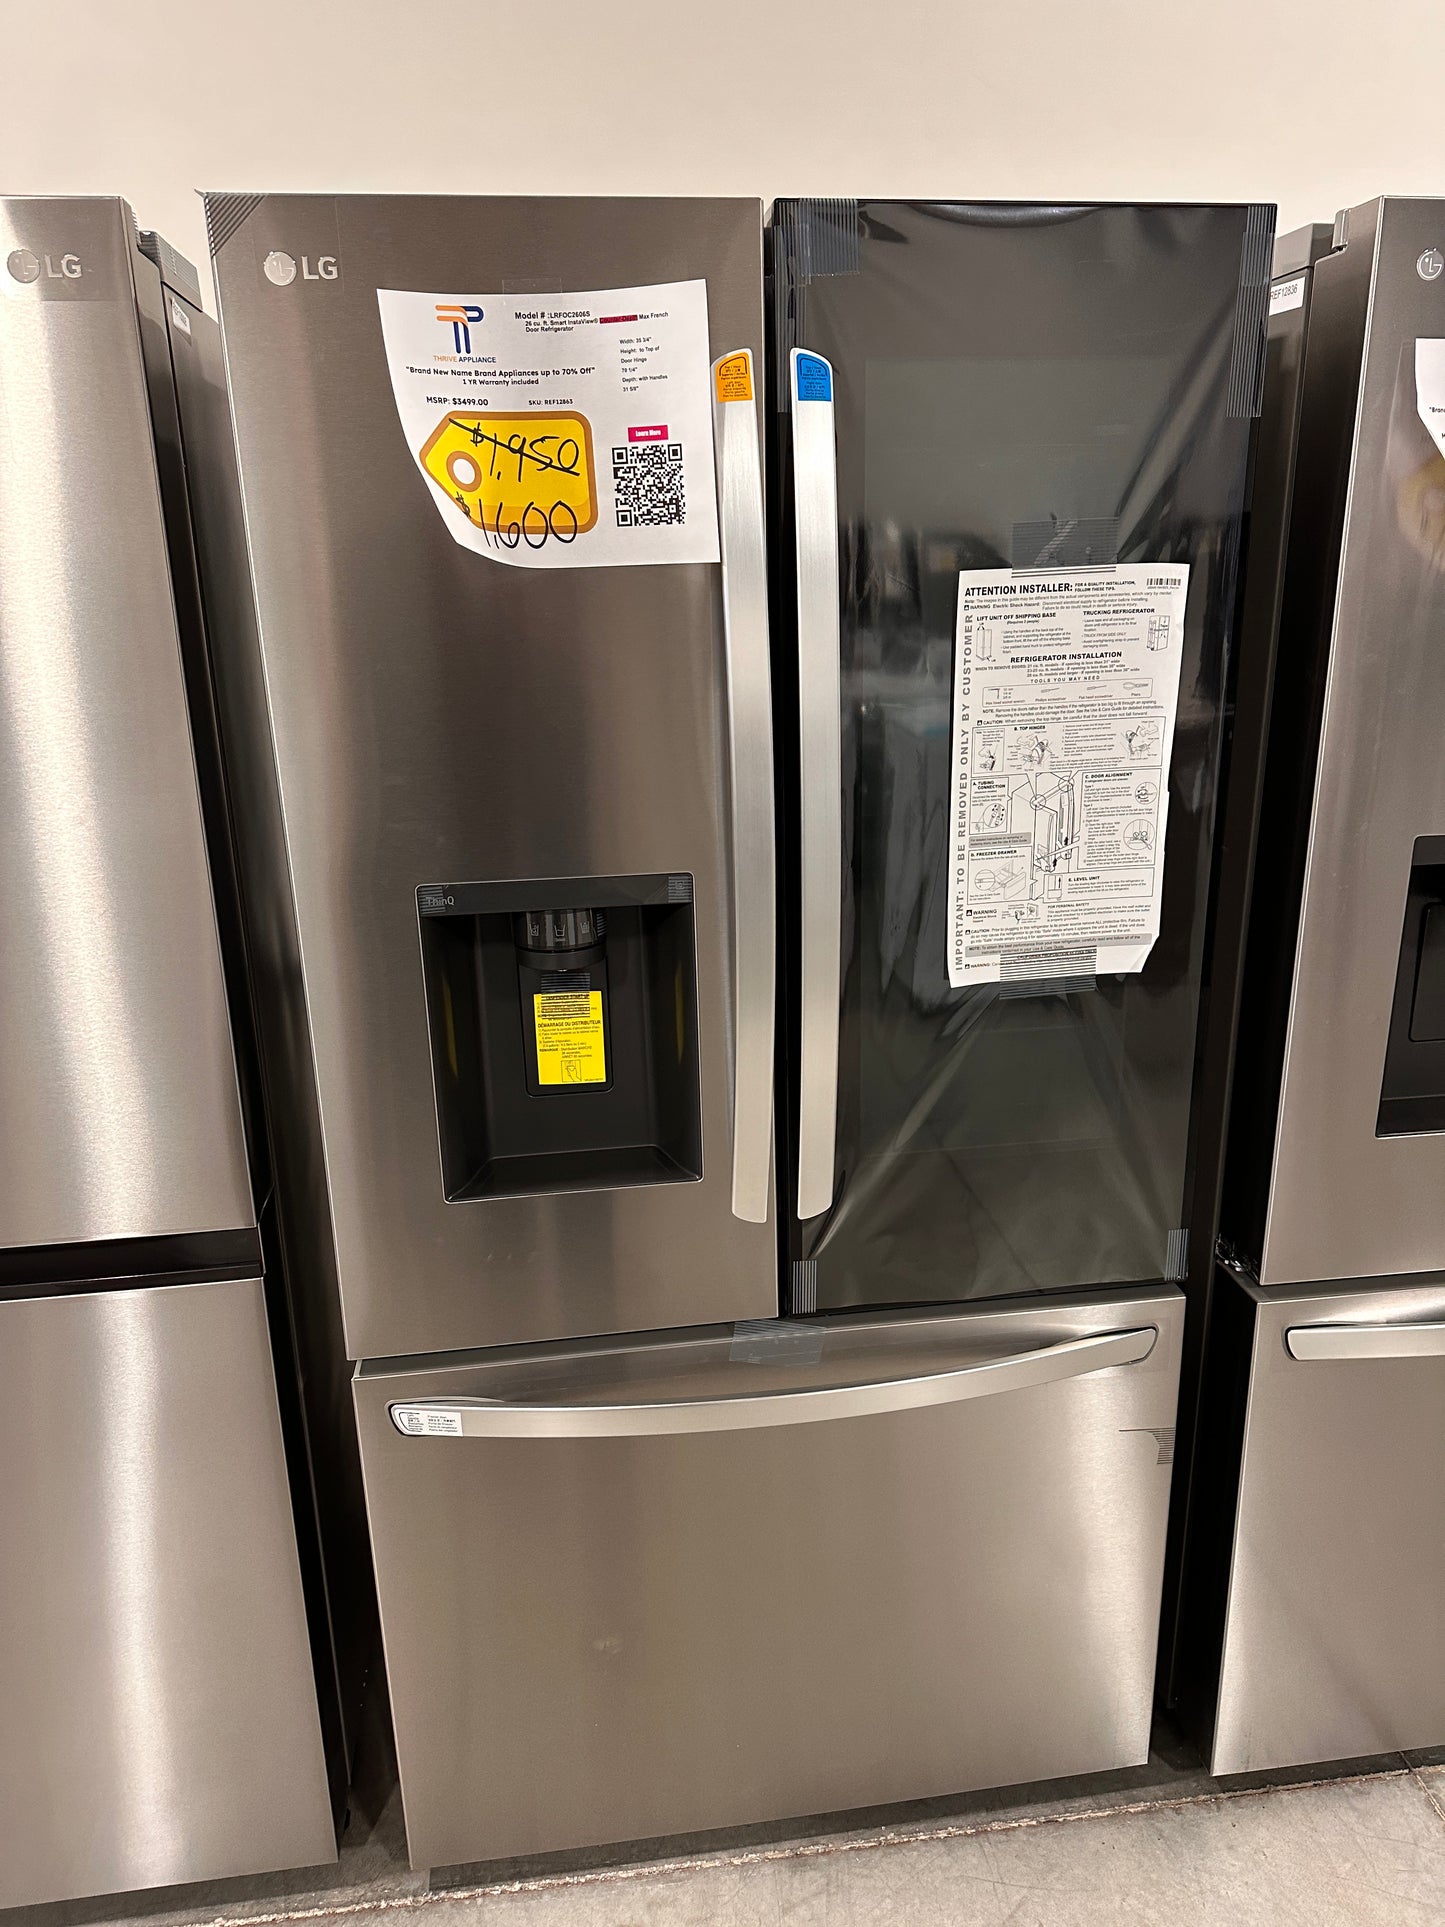 MAJOR DISCOUNT Counter-Depth Smart Refrigerator with InstaView - Model:LRFOC2606S  REF12863